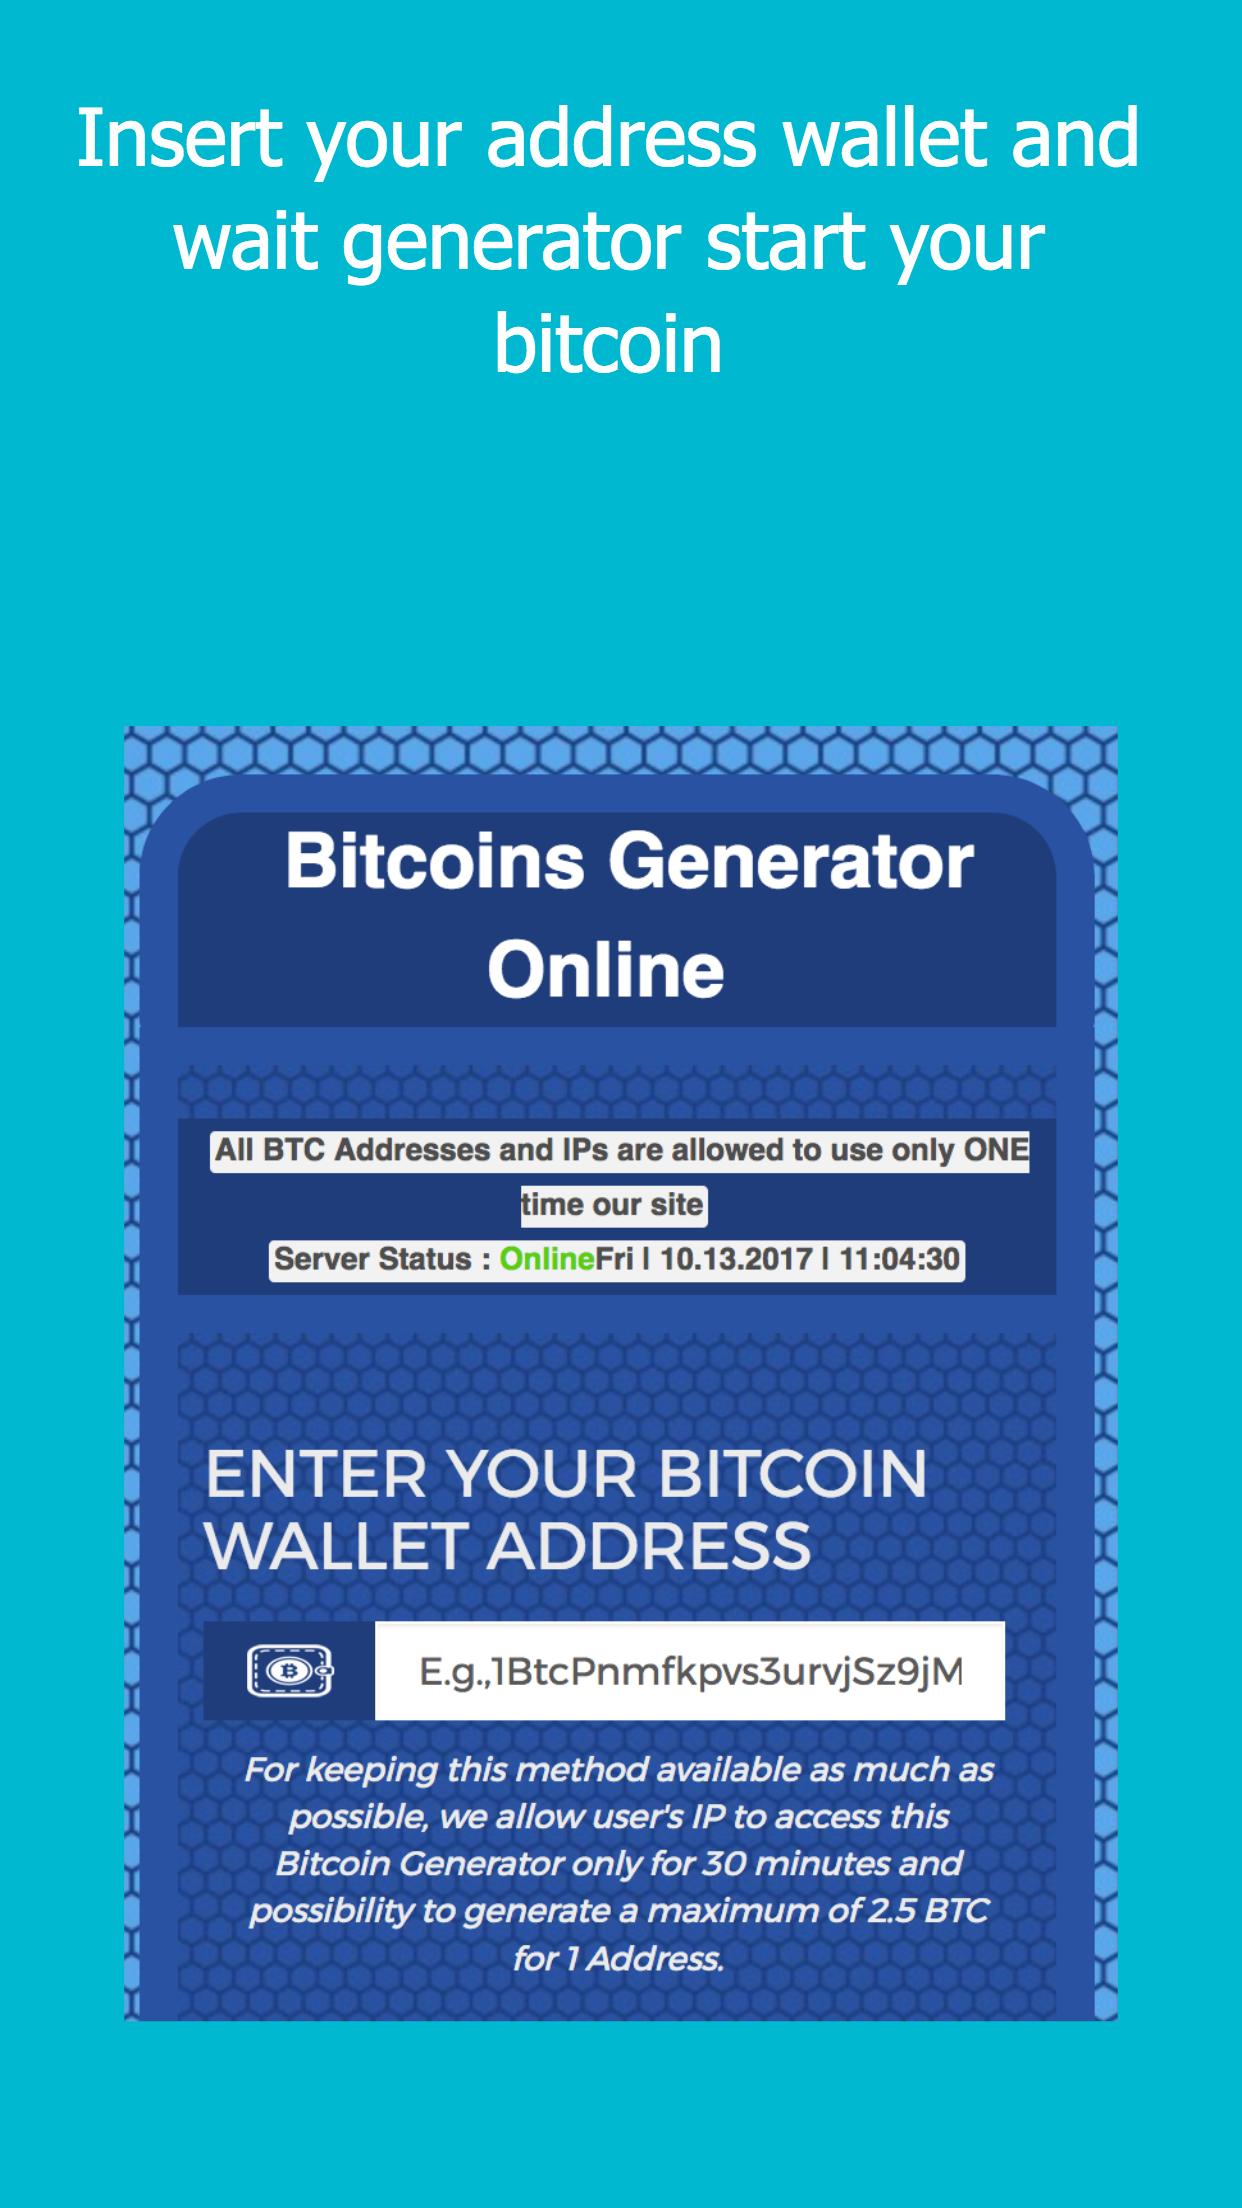 bitcoin generator apk